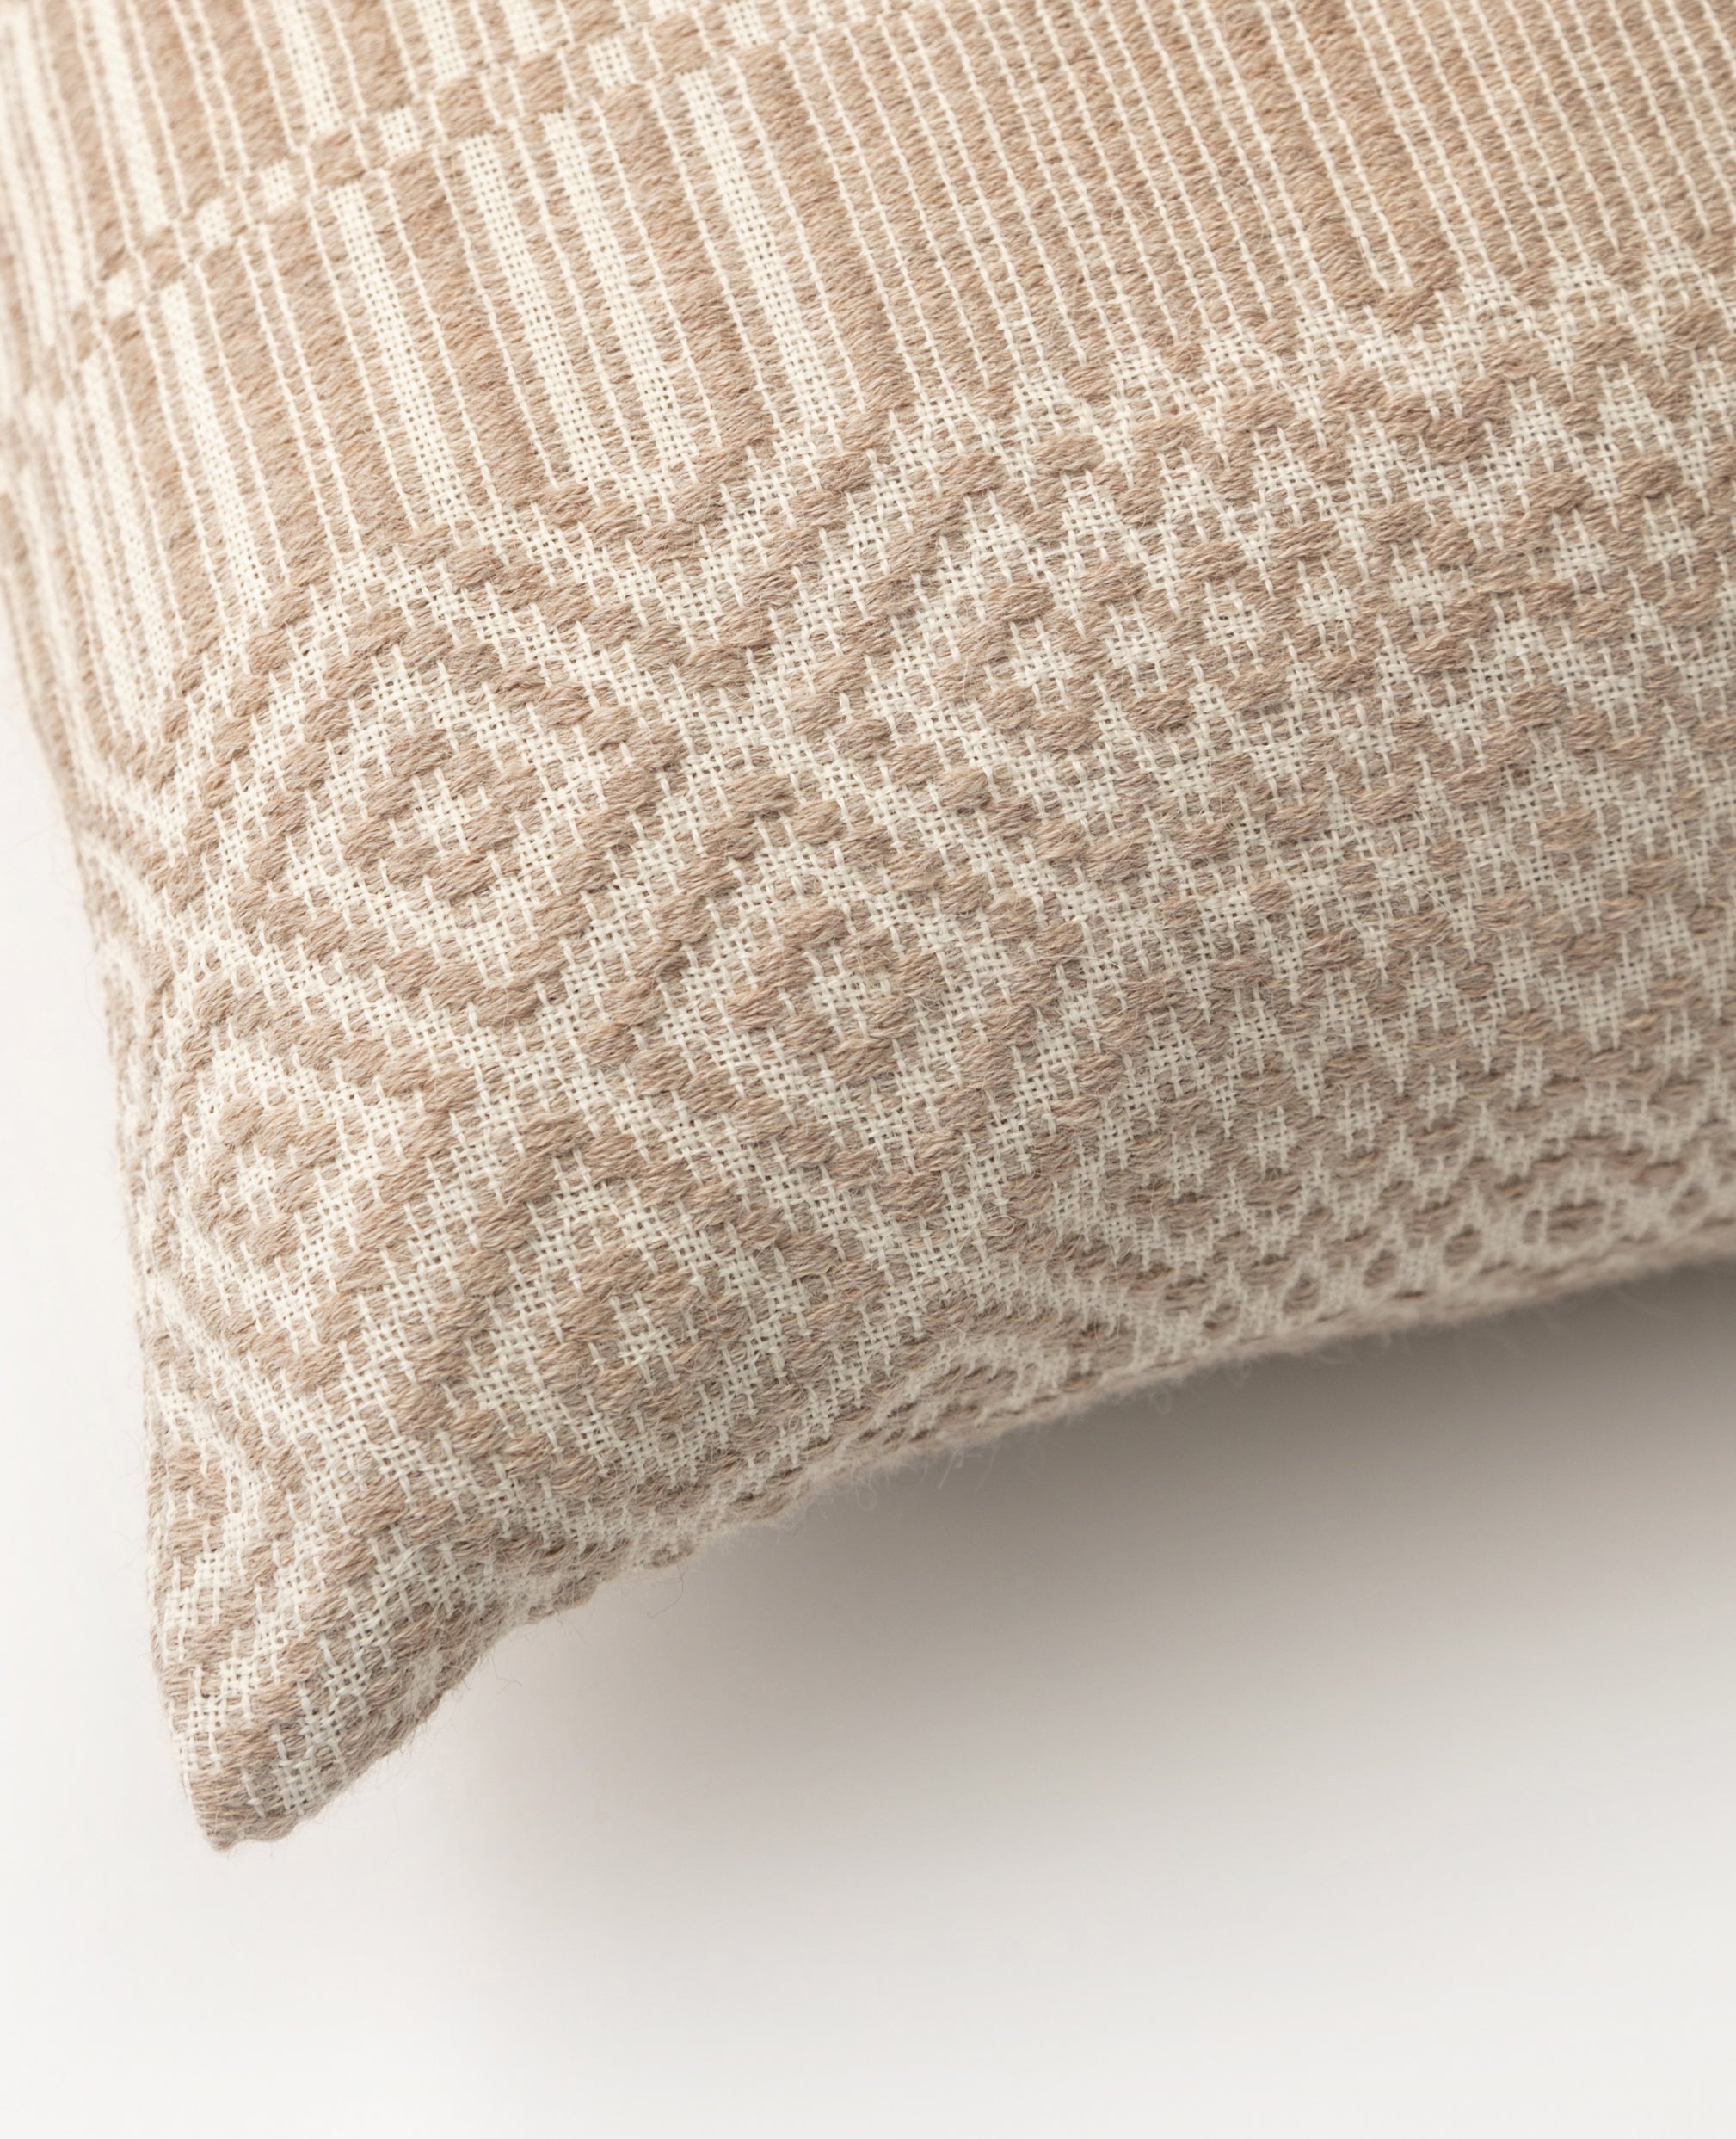 Havn overshot cushion detail